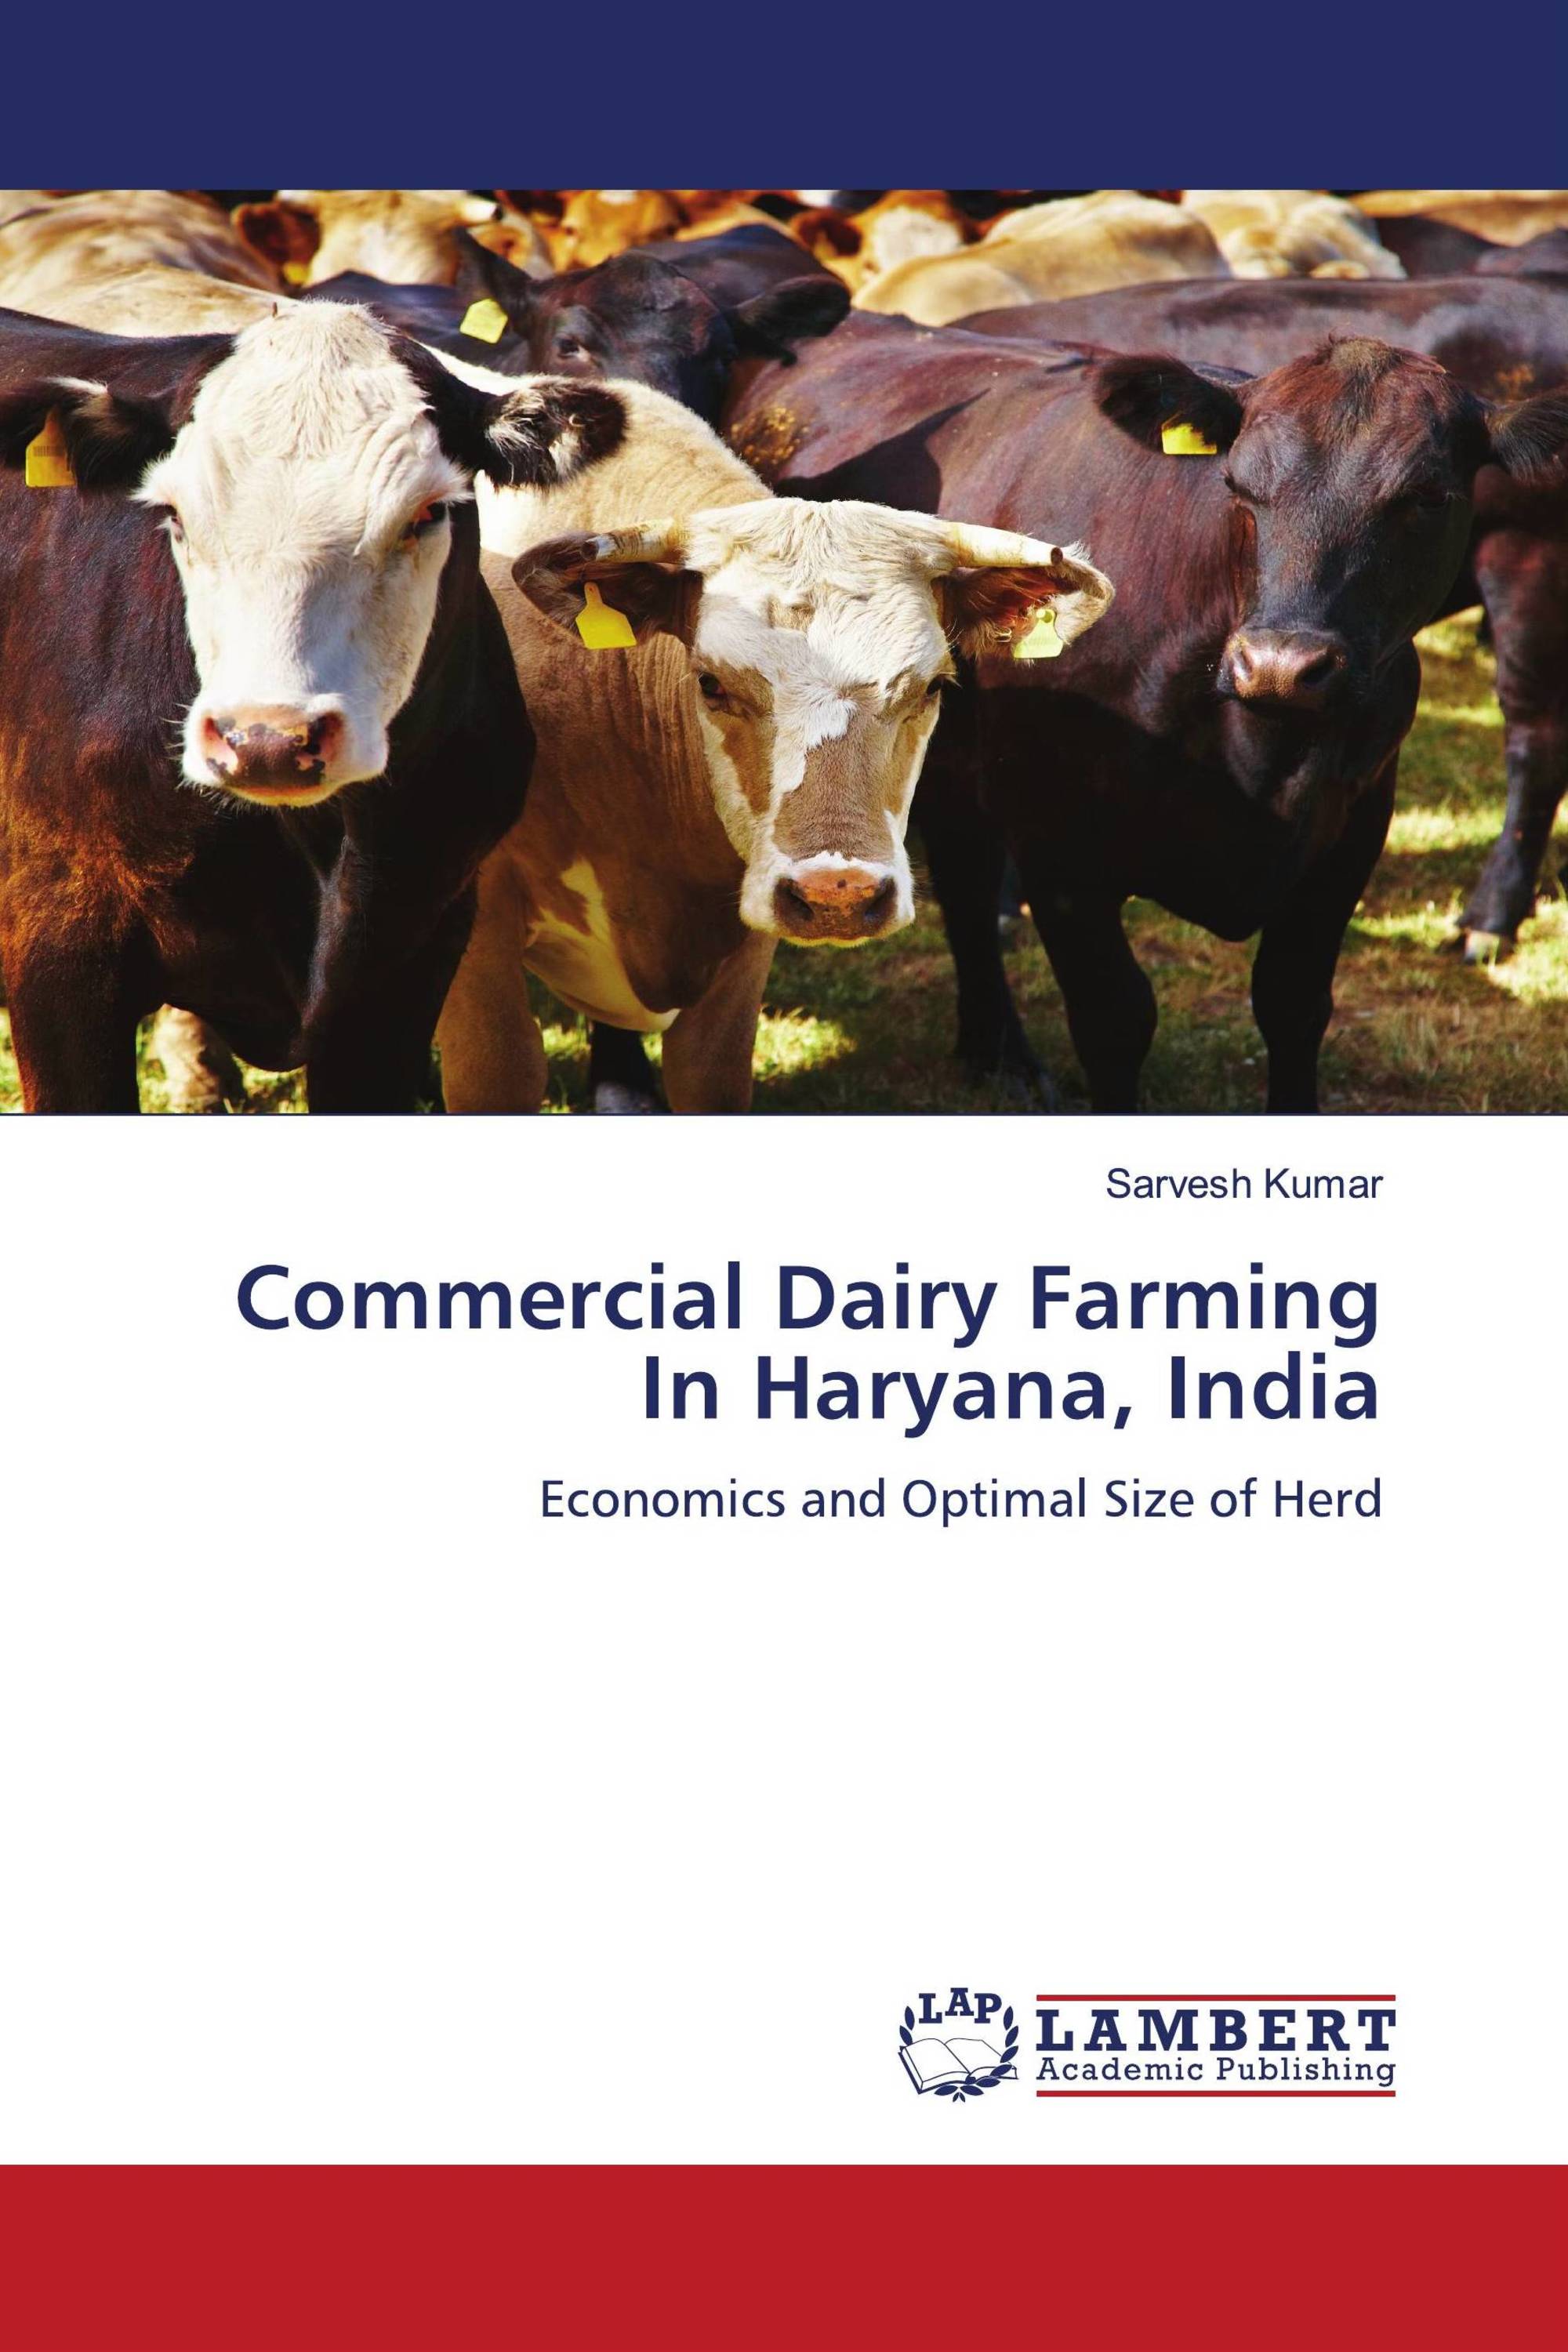 dairy farming business plan in haryana